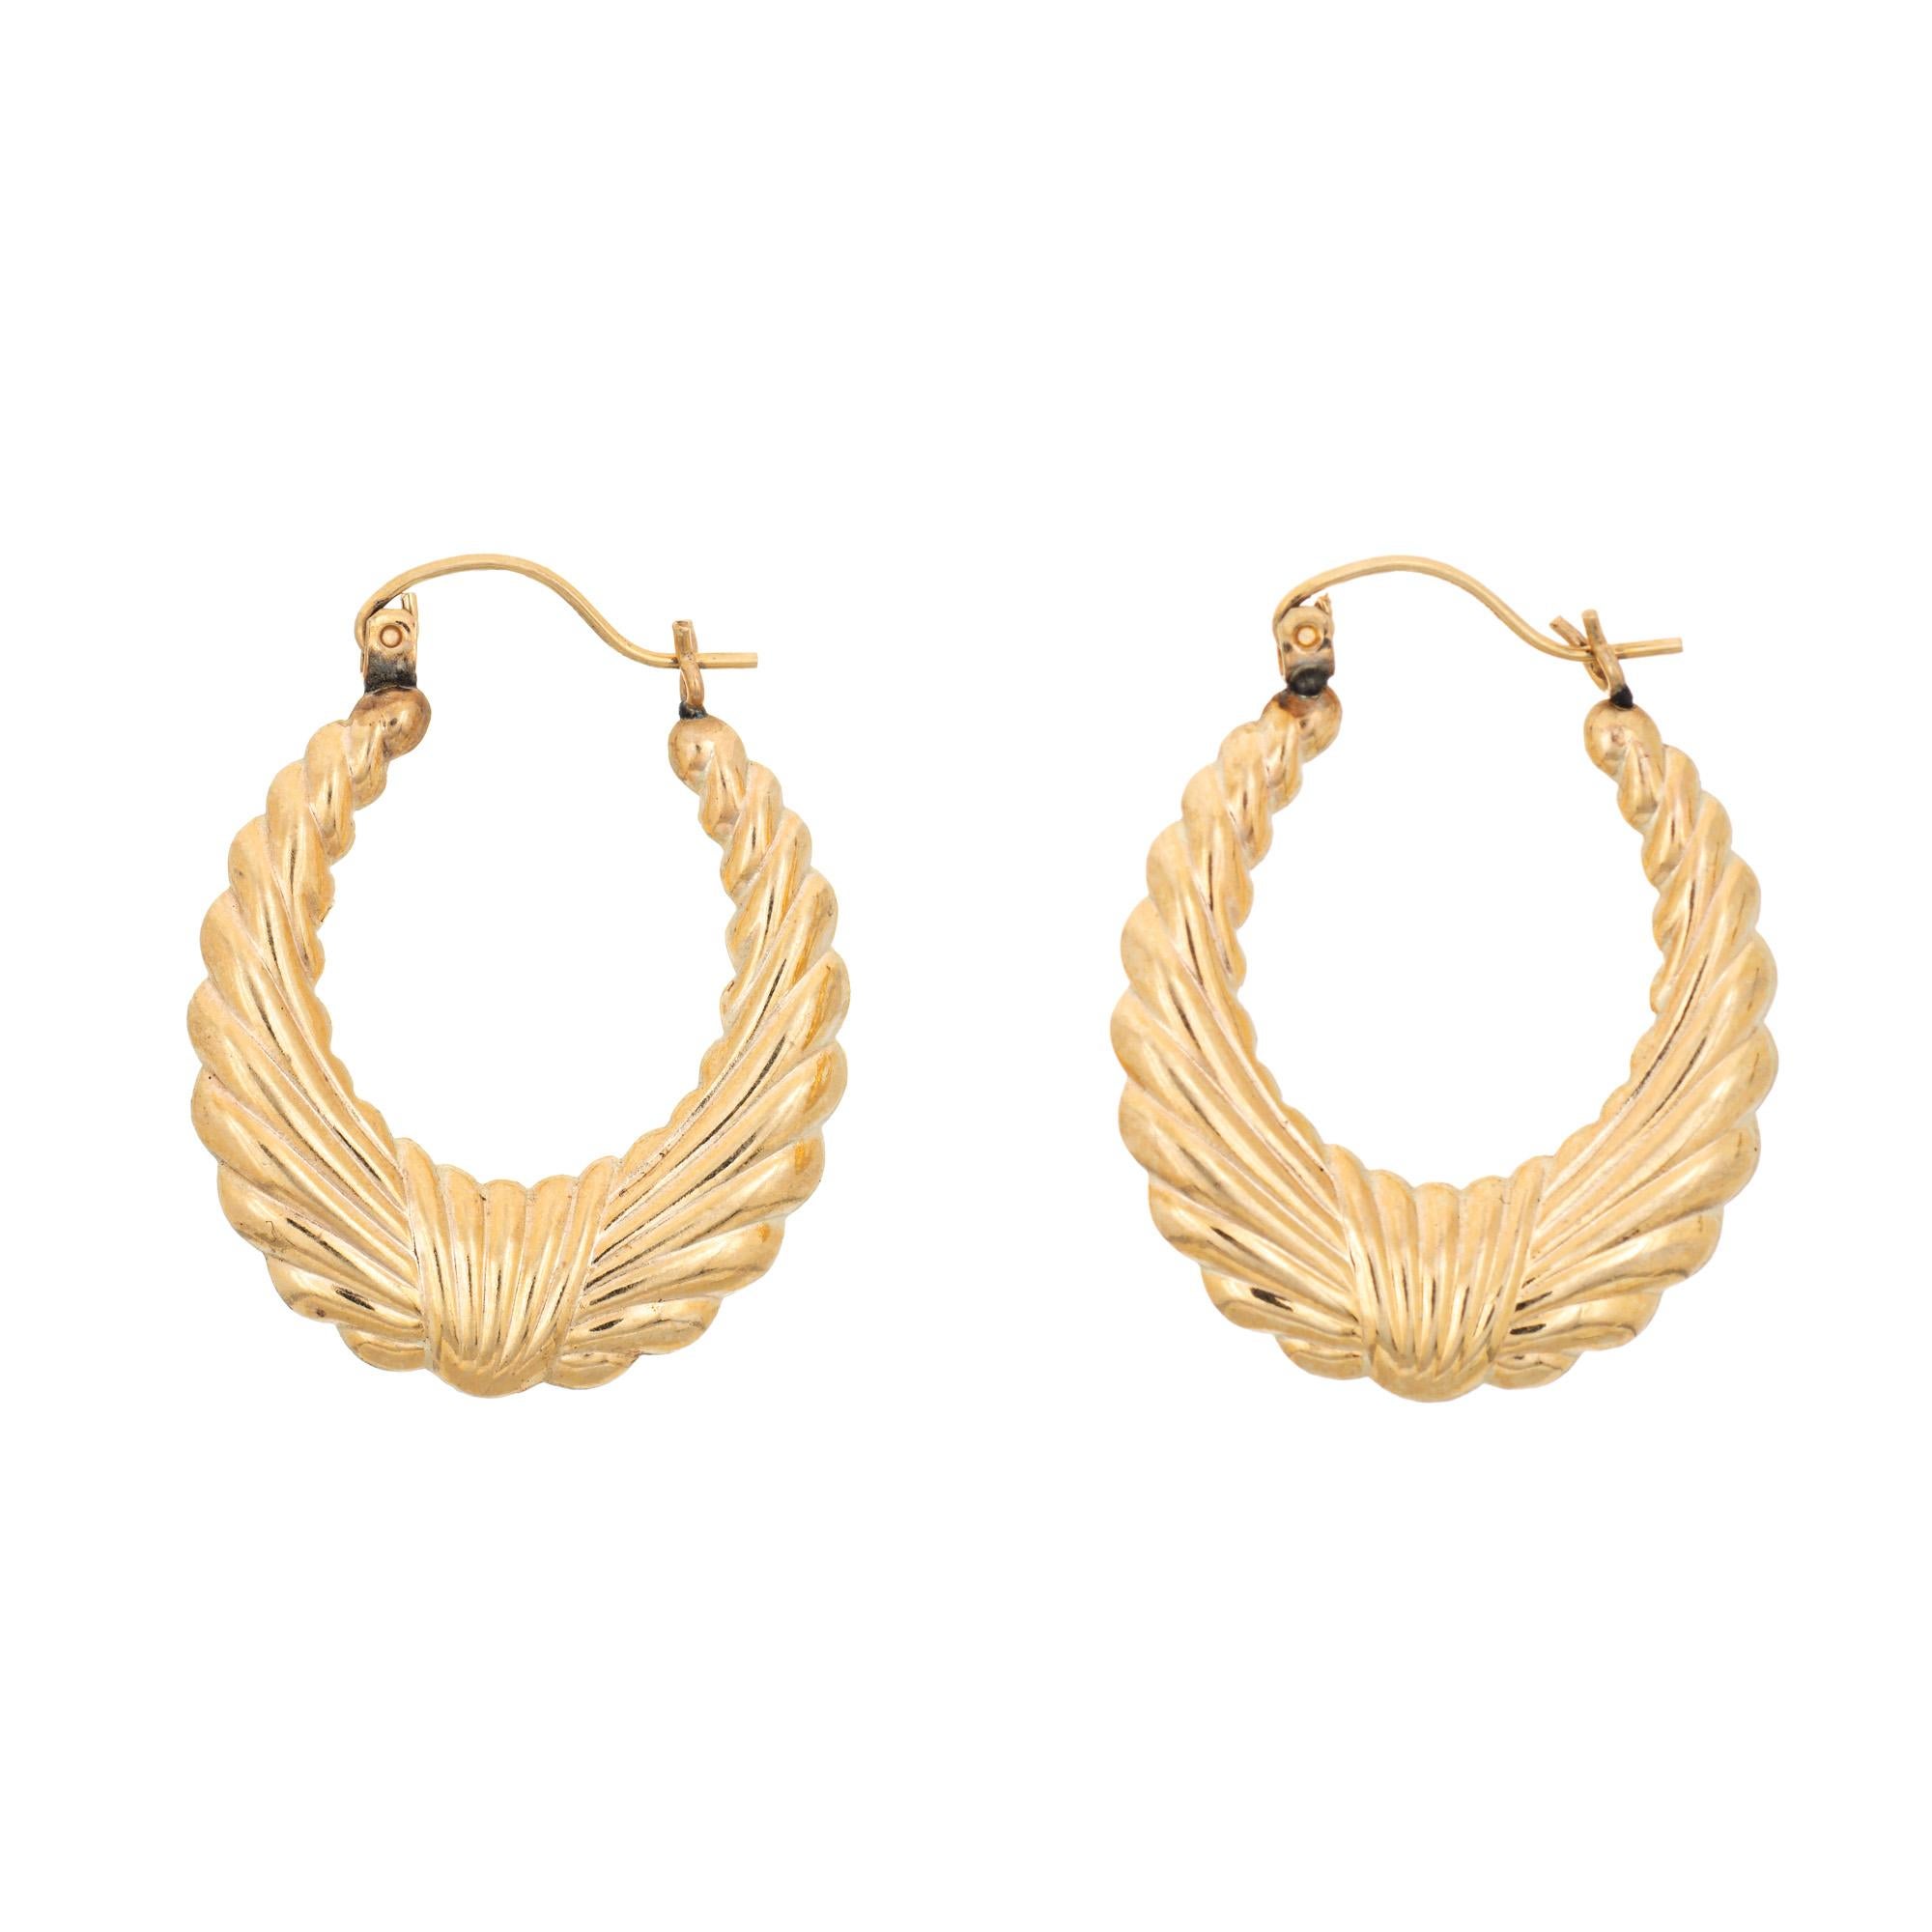 Oval Wreath Hoop Earrings Vintage 14k Yellow Gold 1